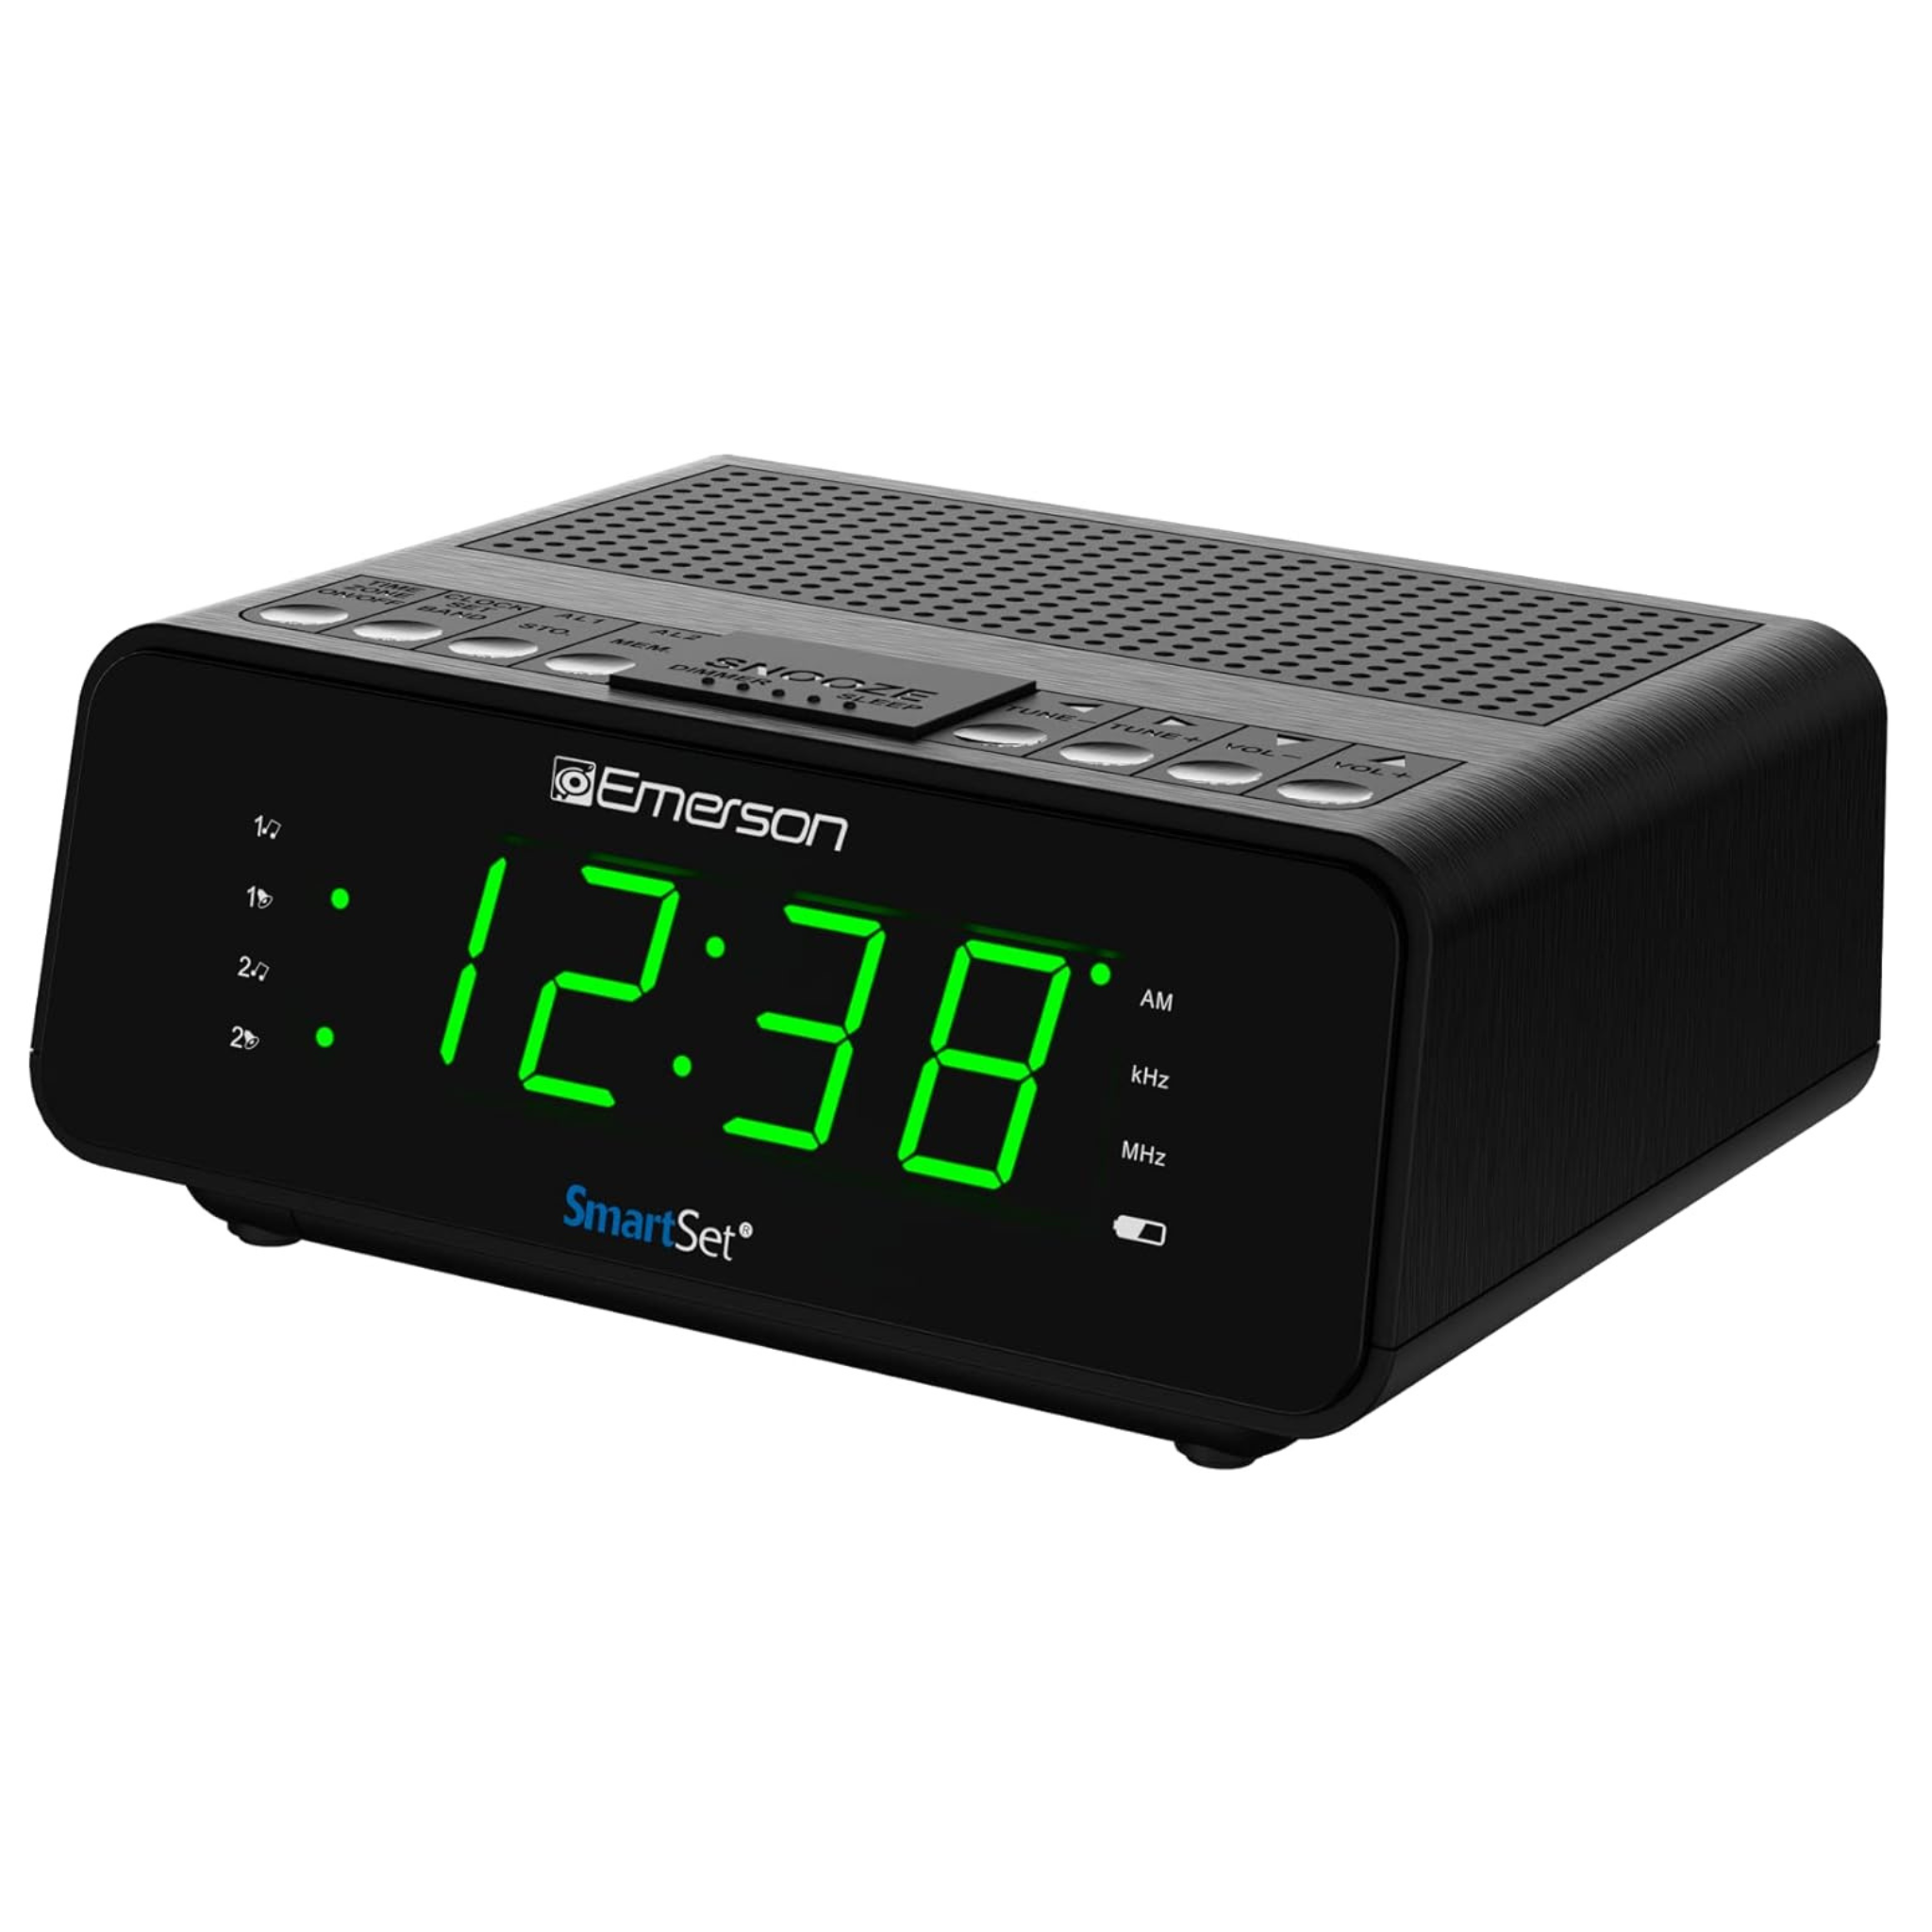 Emerson SmartSet Dual Alarm Clock Radio with AM/FM Radio LED Display